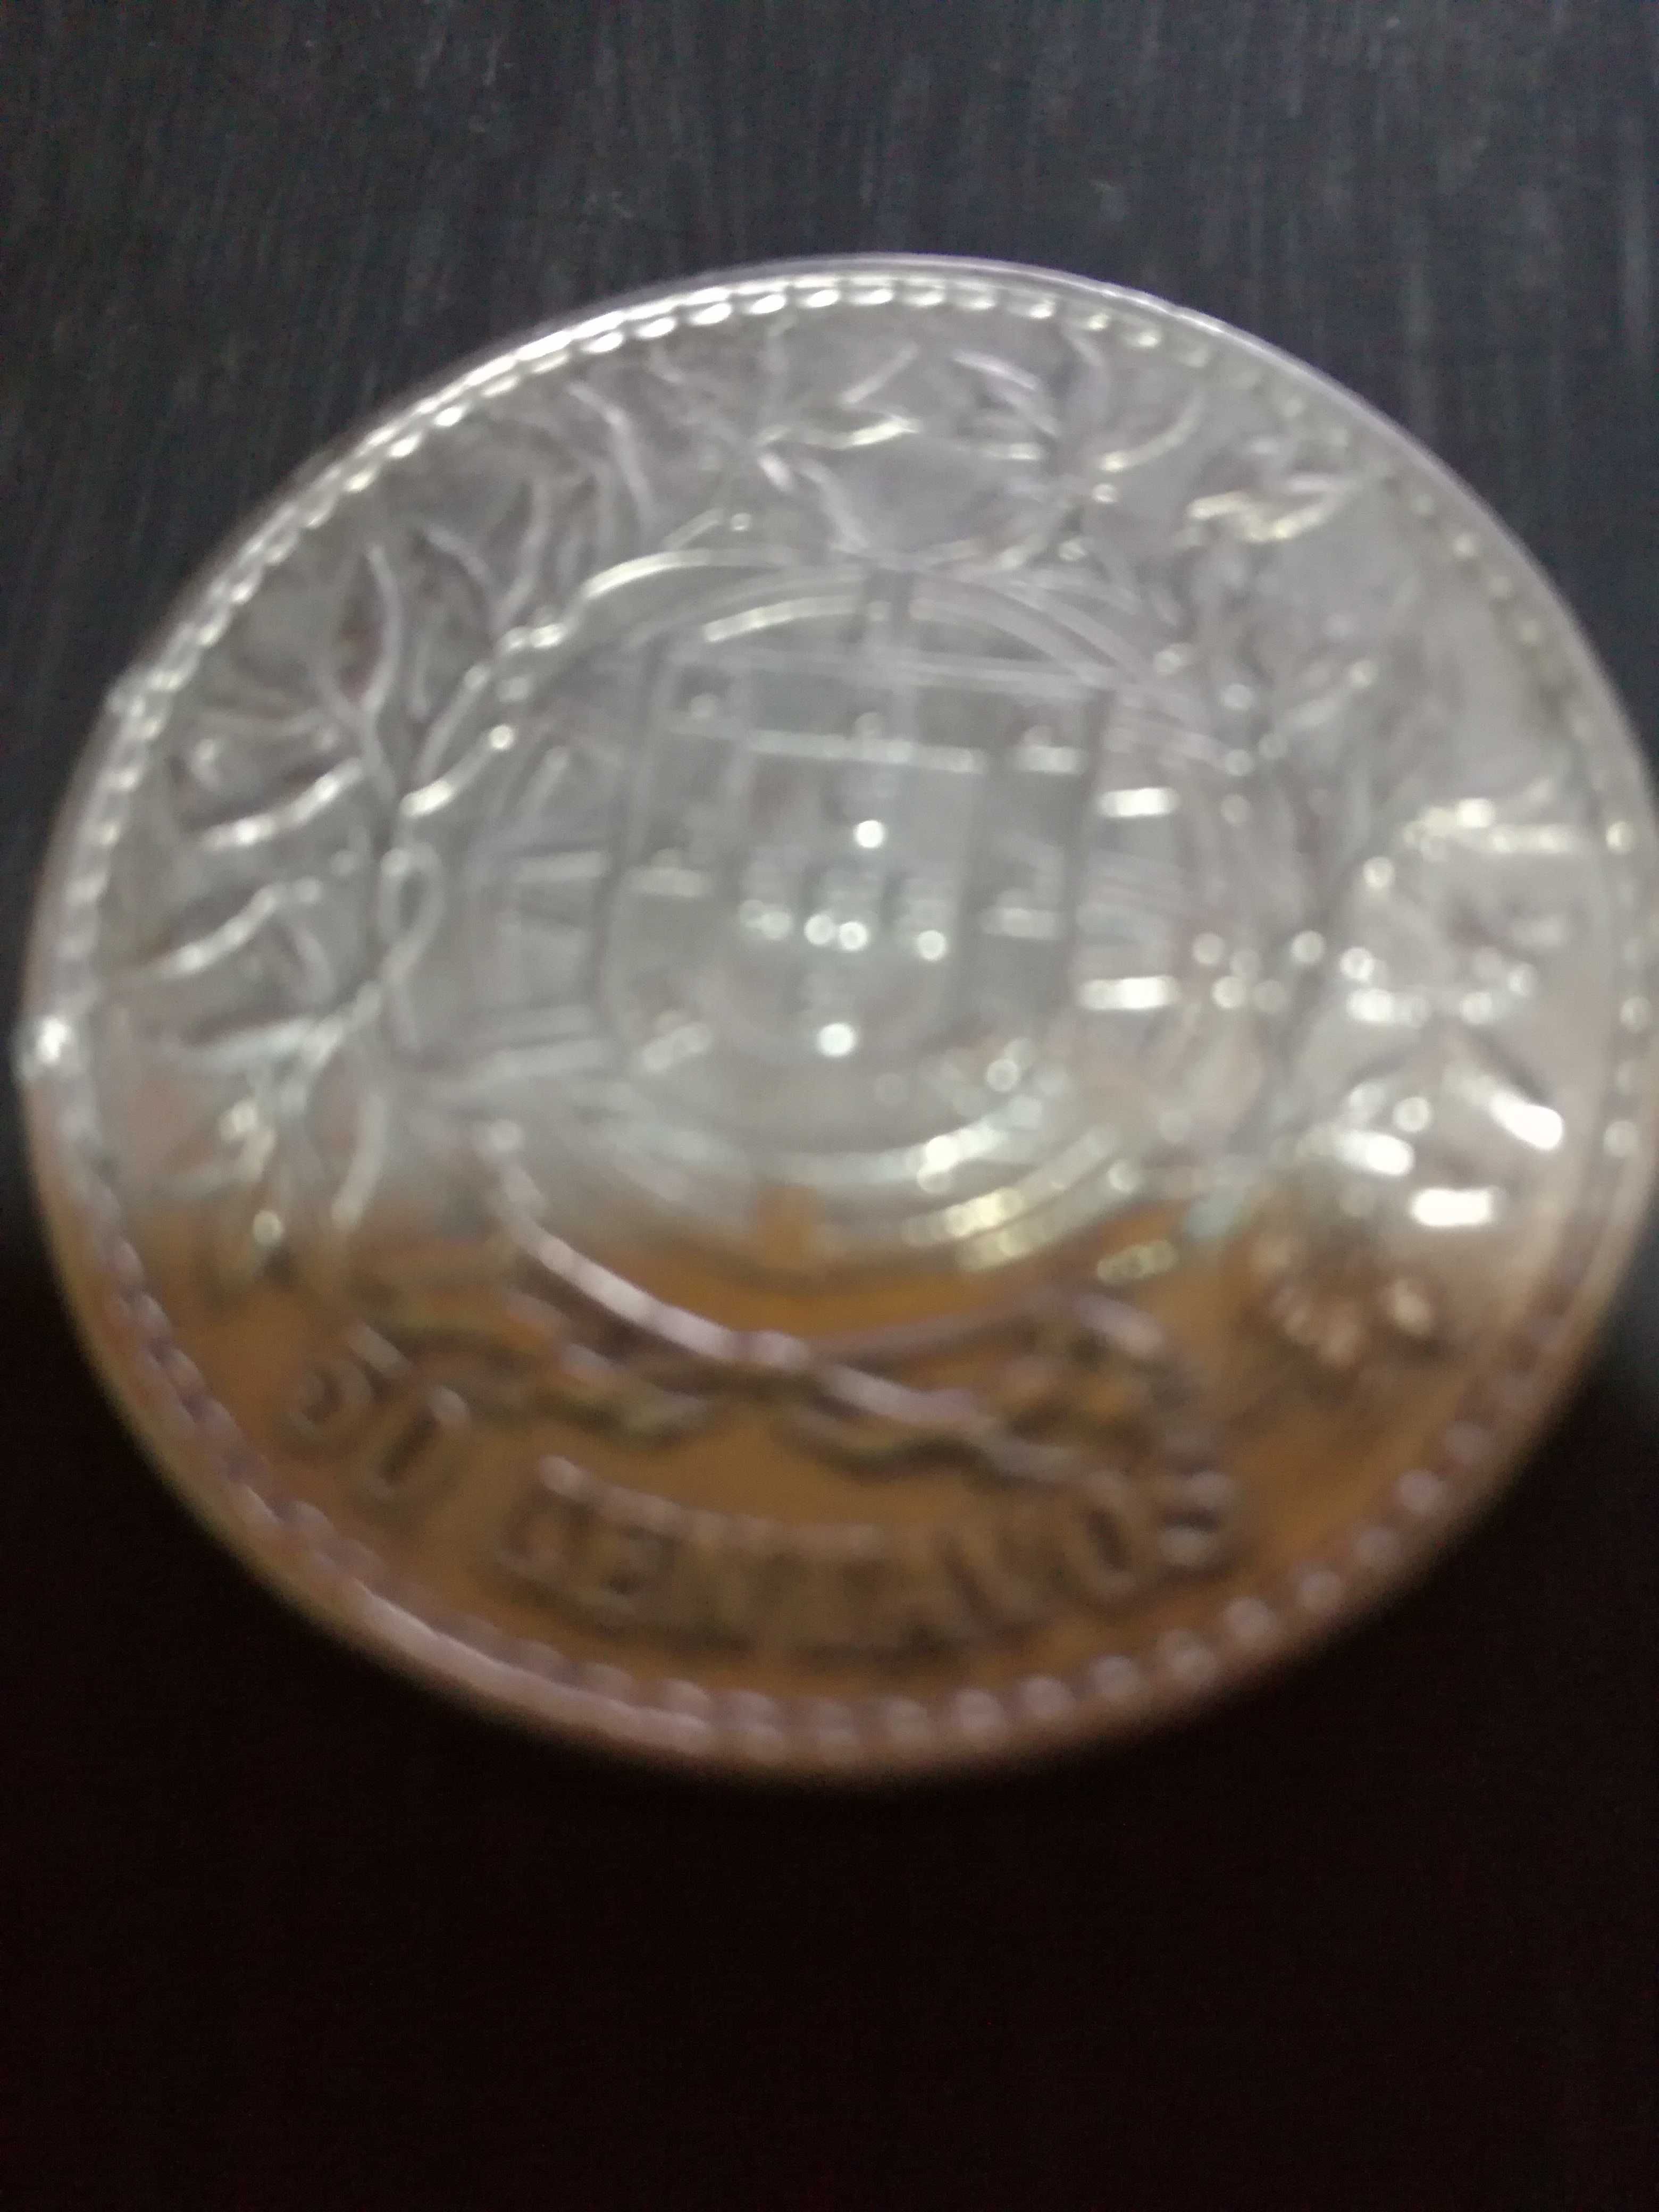 moeda republica 50centavos 1913 prata